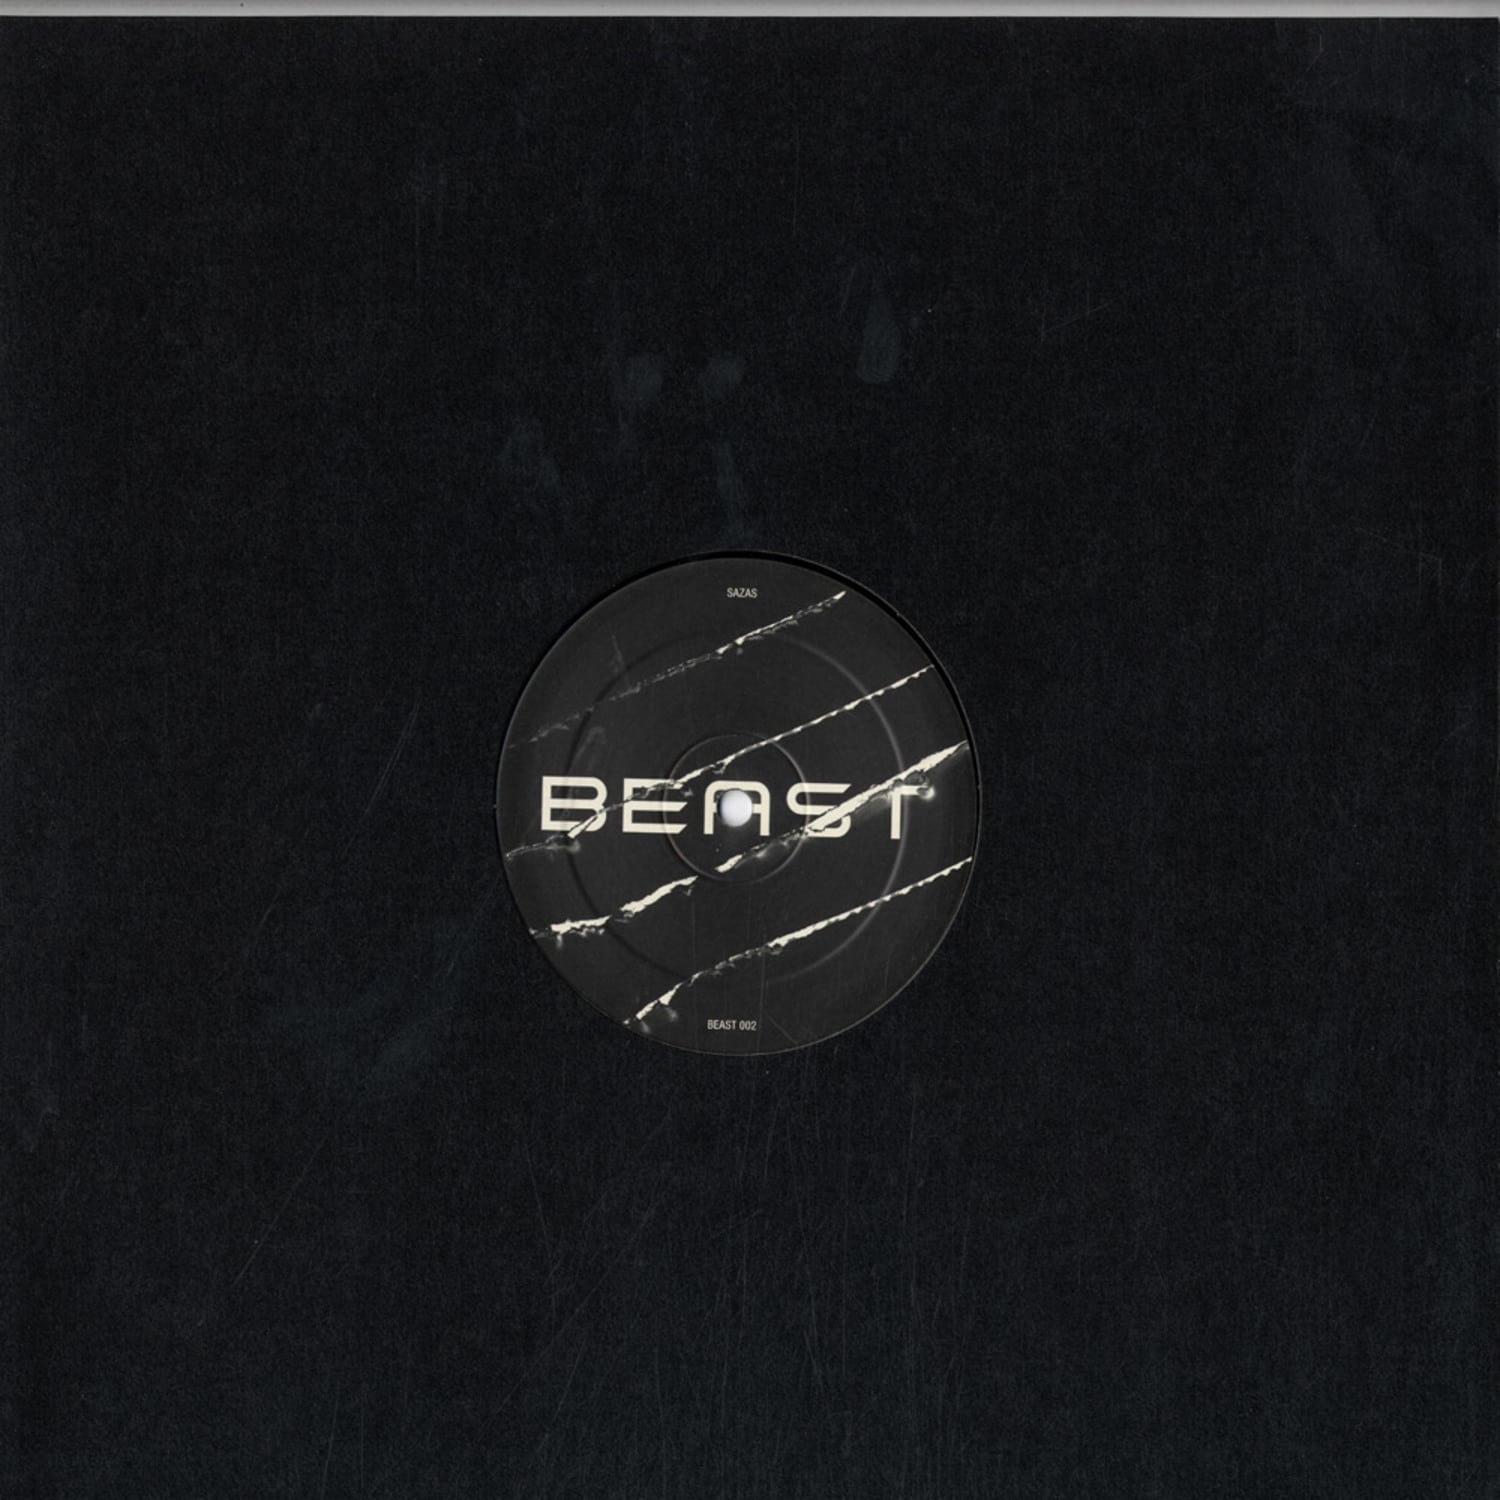 DJ Ogi - BEAST BOMBARDER EP